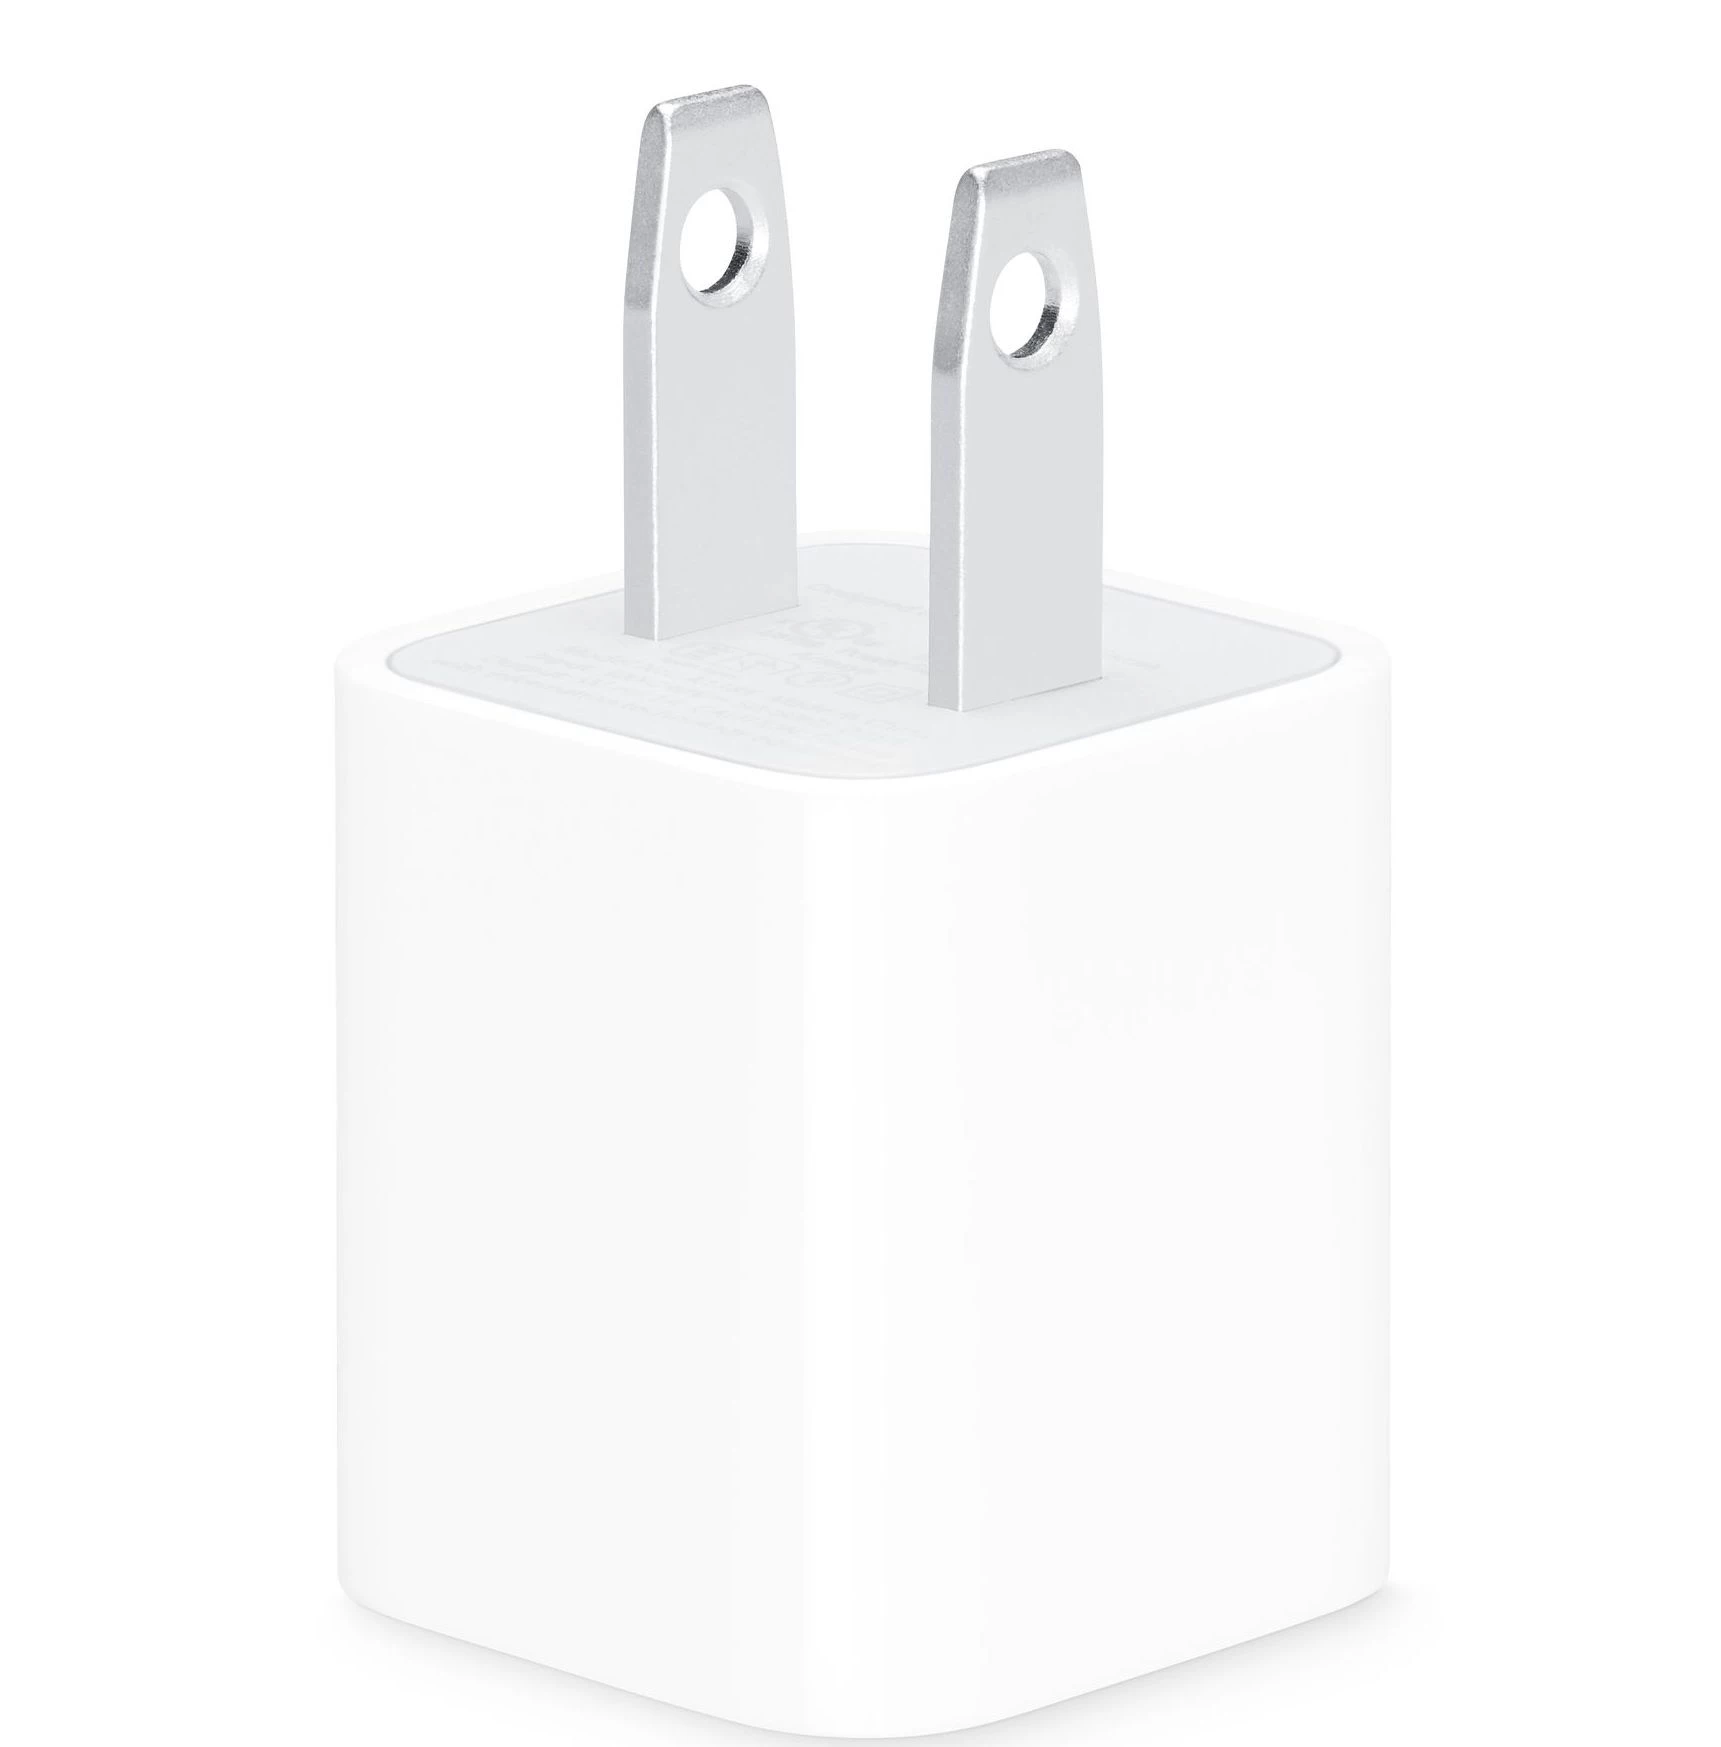 Apple 5W USB Power Adapter (MD810) US